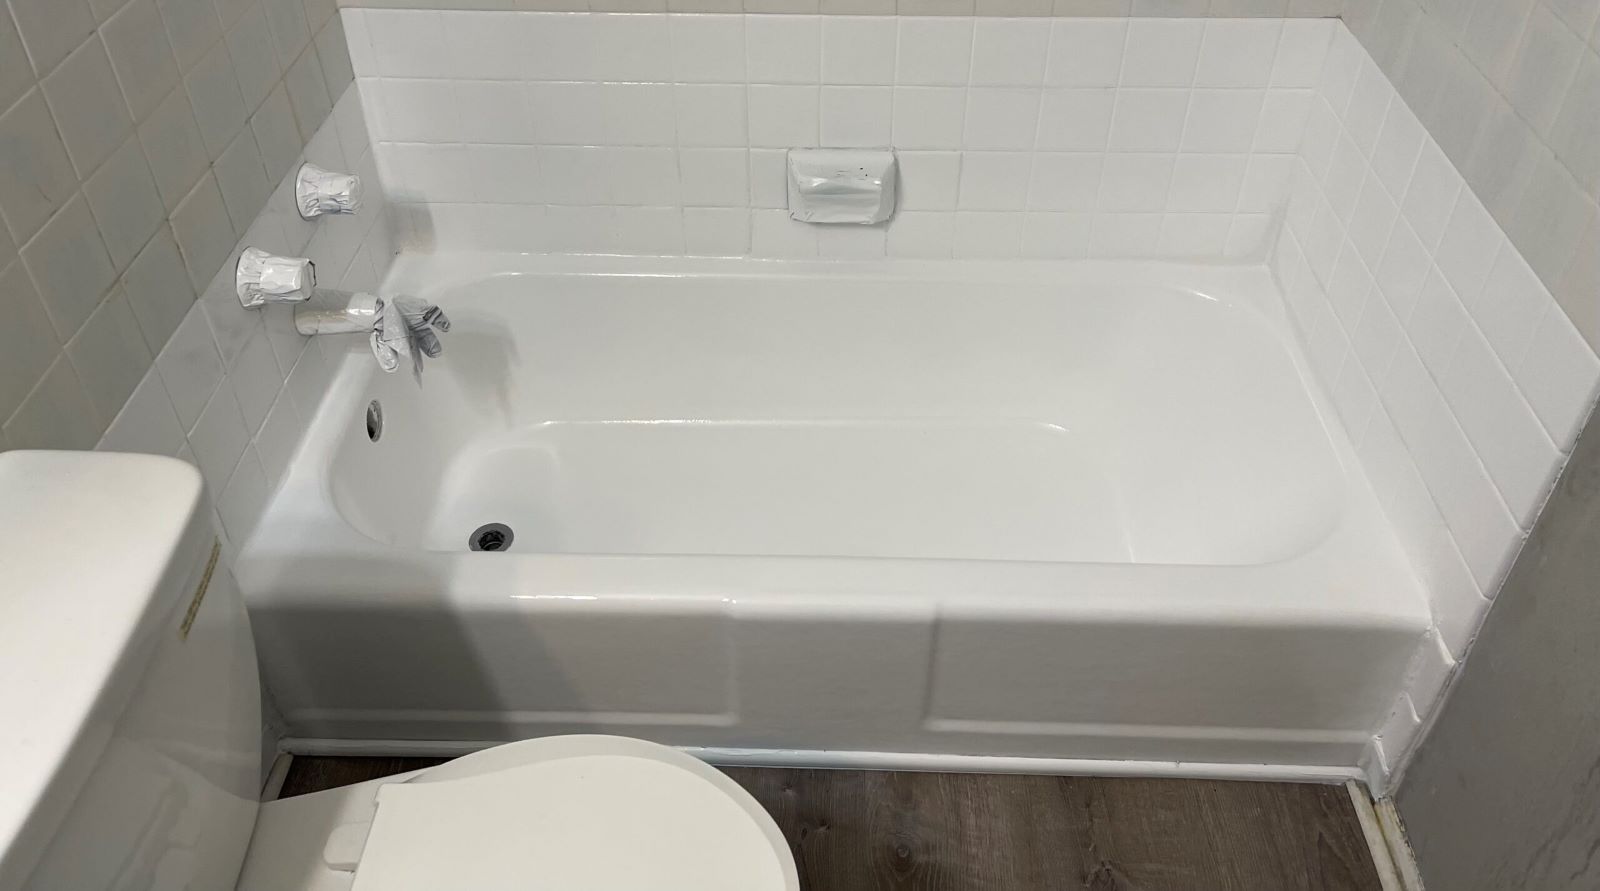 Low Cost Bathtub Refinishing in Ladue, MO | Affordable Tub Reglazing Near Ladue